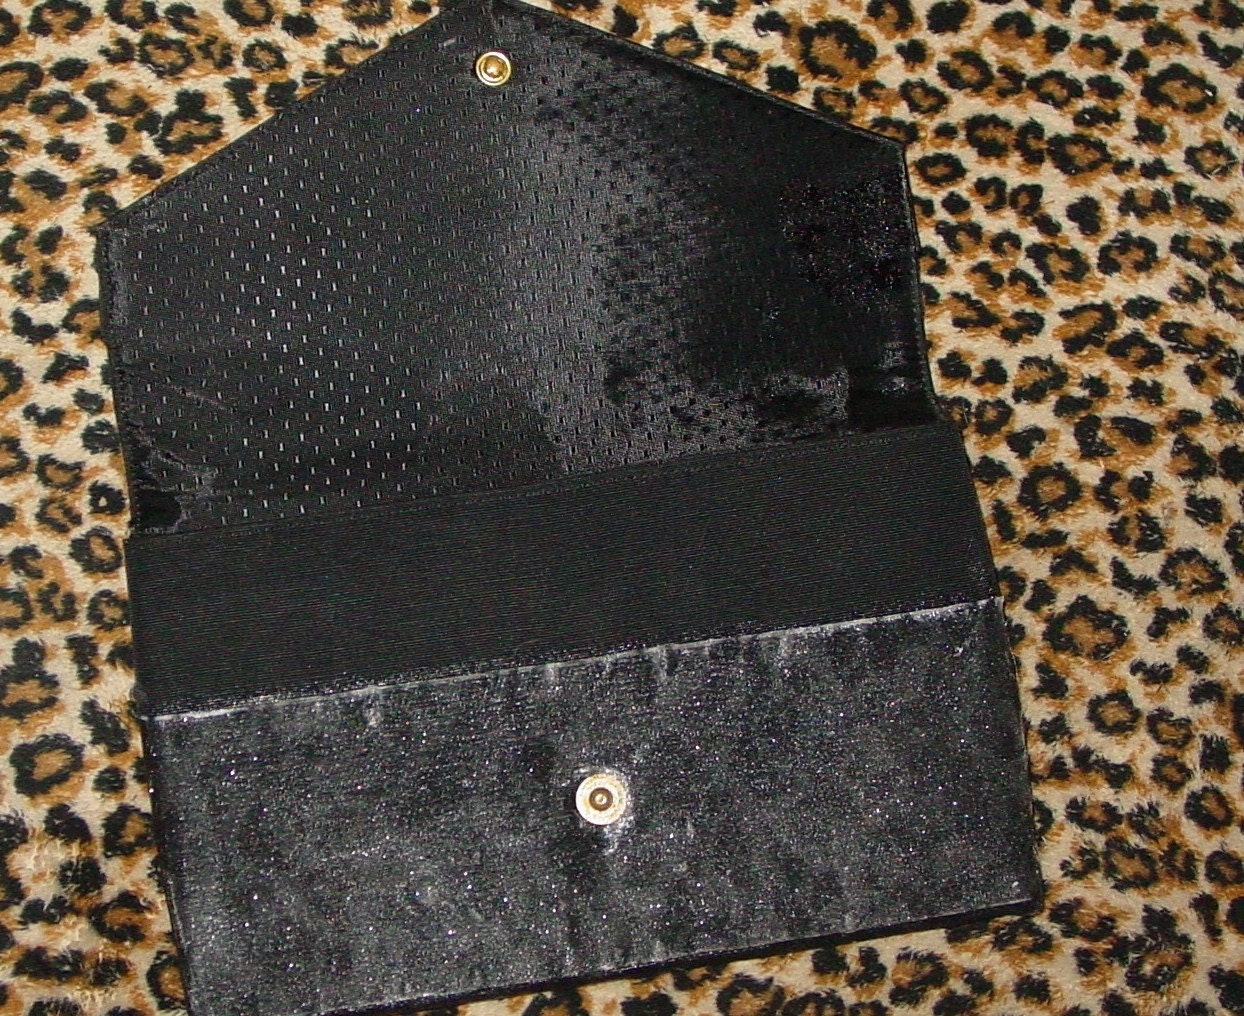 HANDMADE HALLOWEEN black spider purse EVERY WITCH NEEDS one